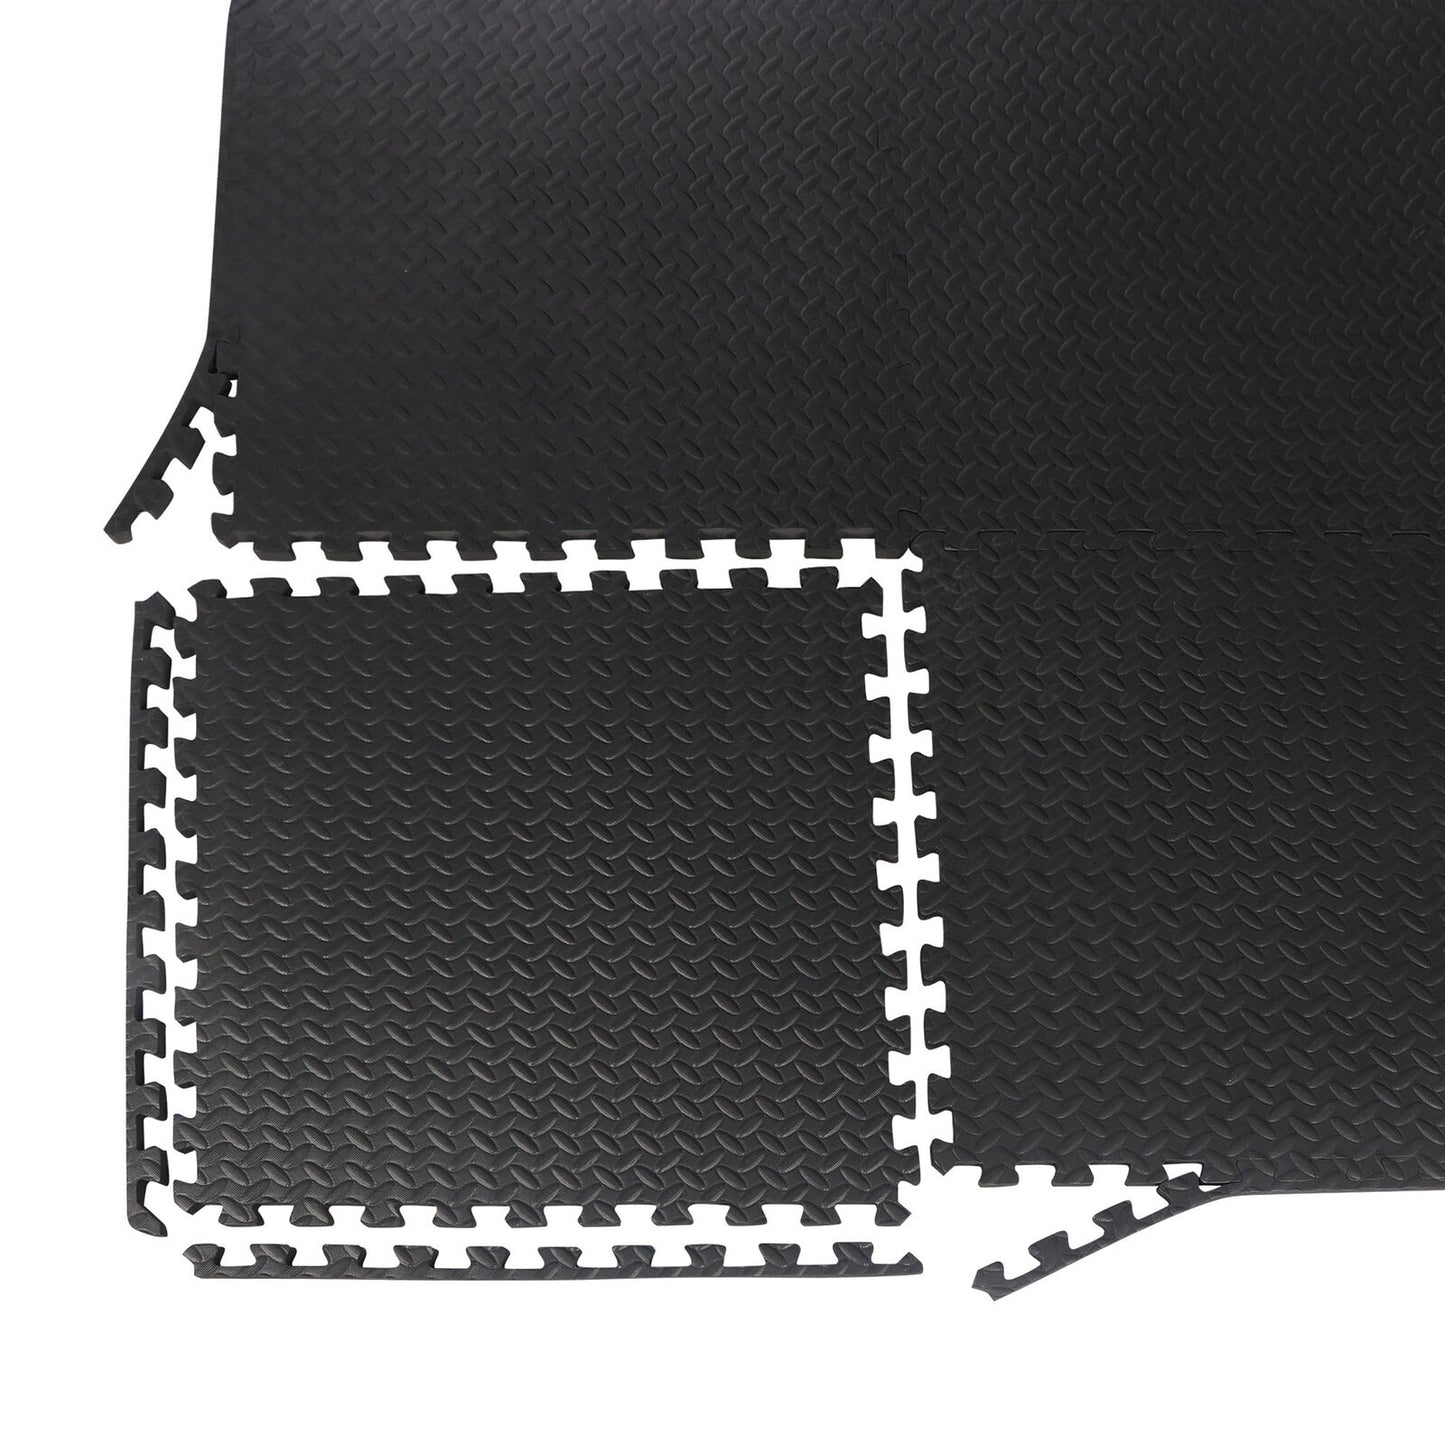 24pc Puzzle Exercise Mat w/ EVA Foam Interlocking Tiles 96 Sq Ft GYM Home